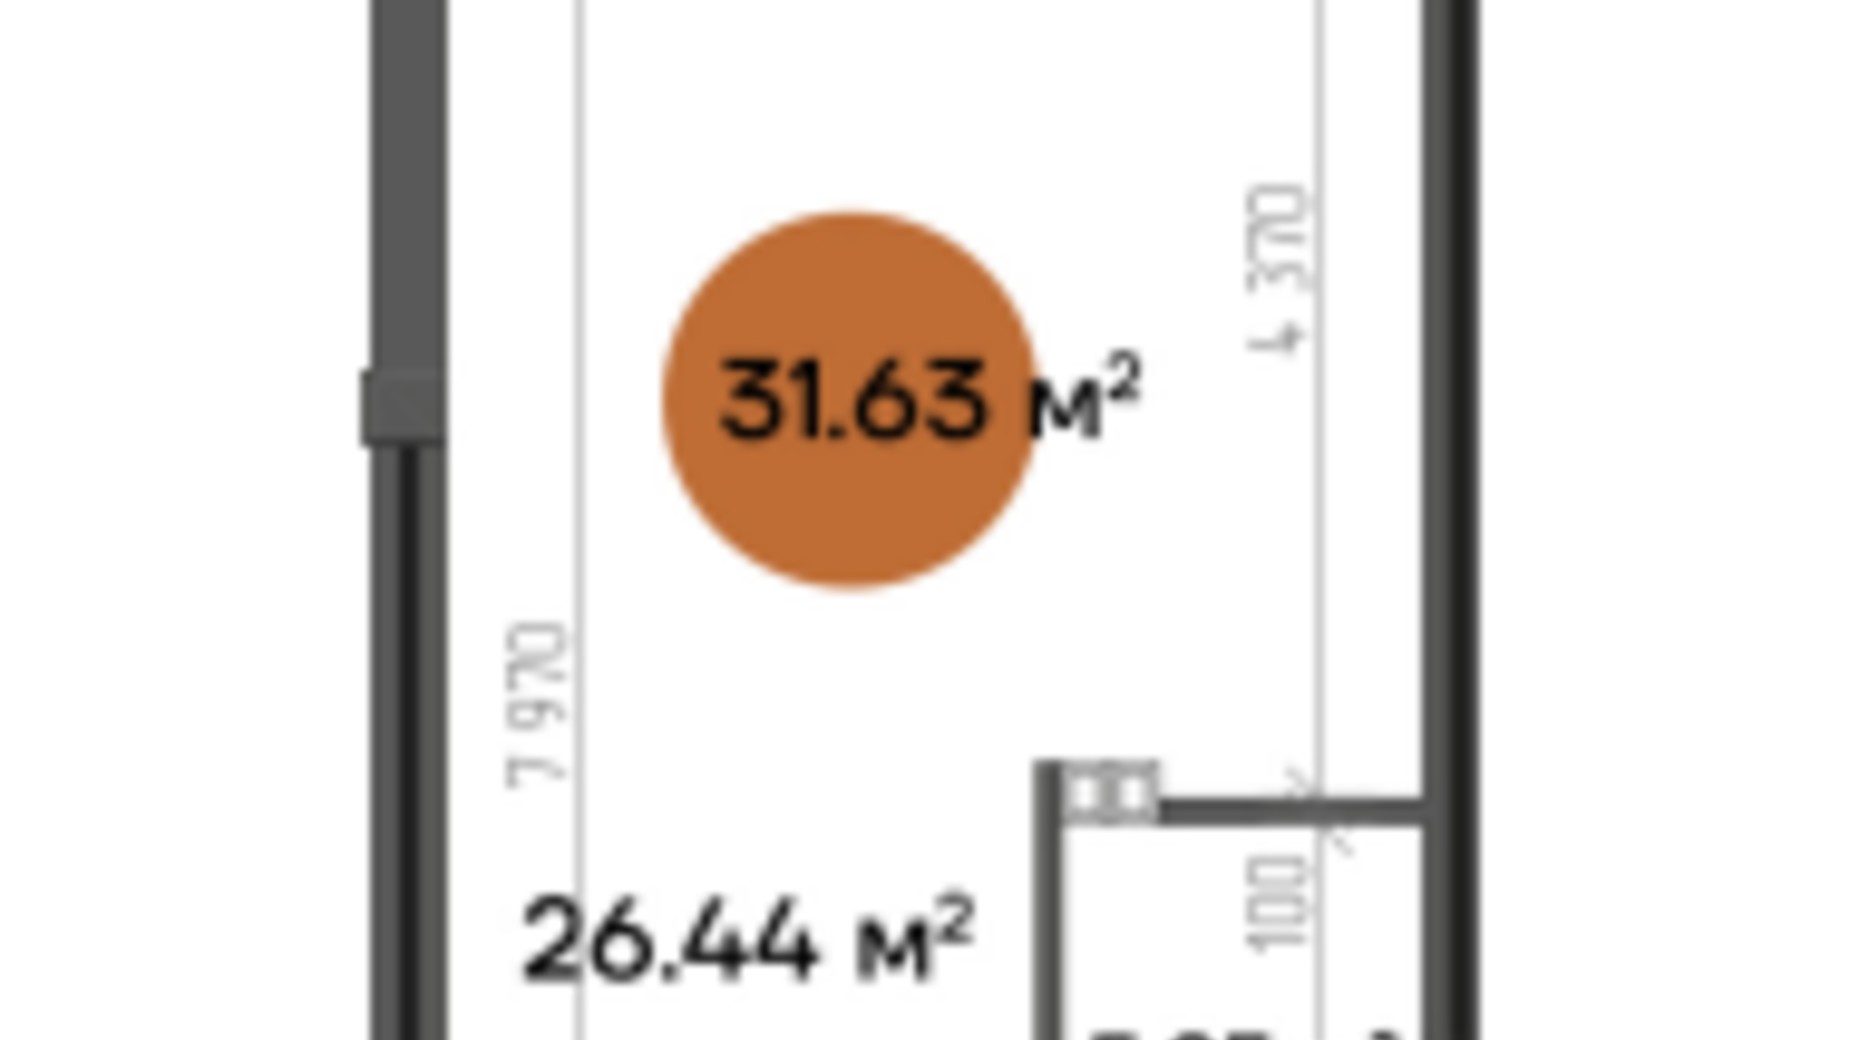 Планировка помещения в МФК Shevchenka 31.63 м², фото 607267